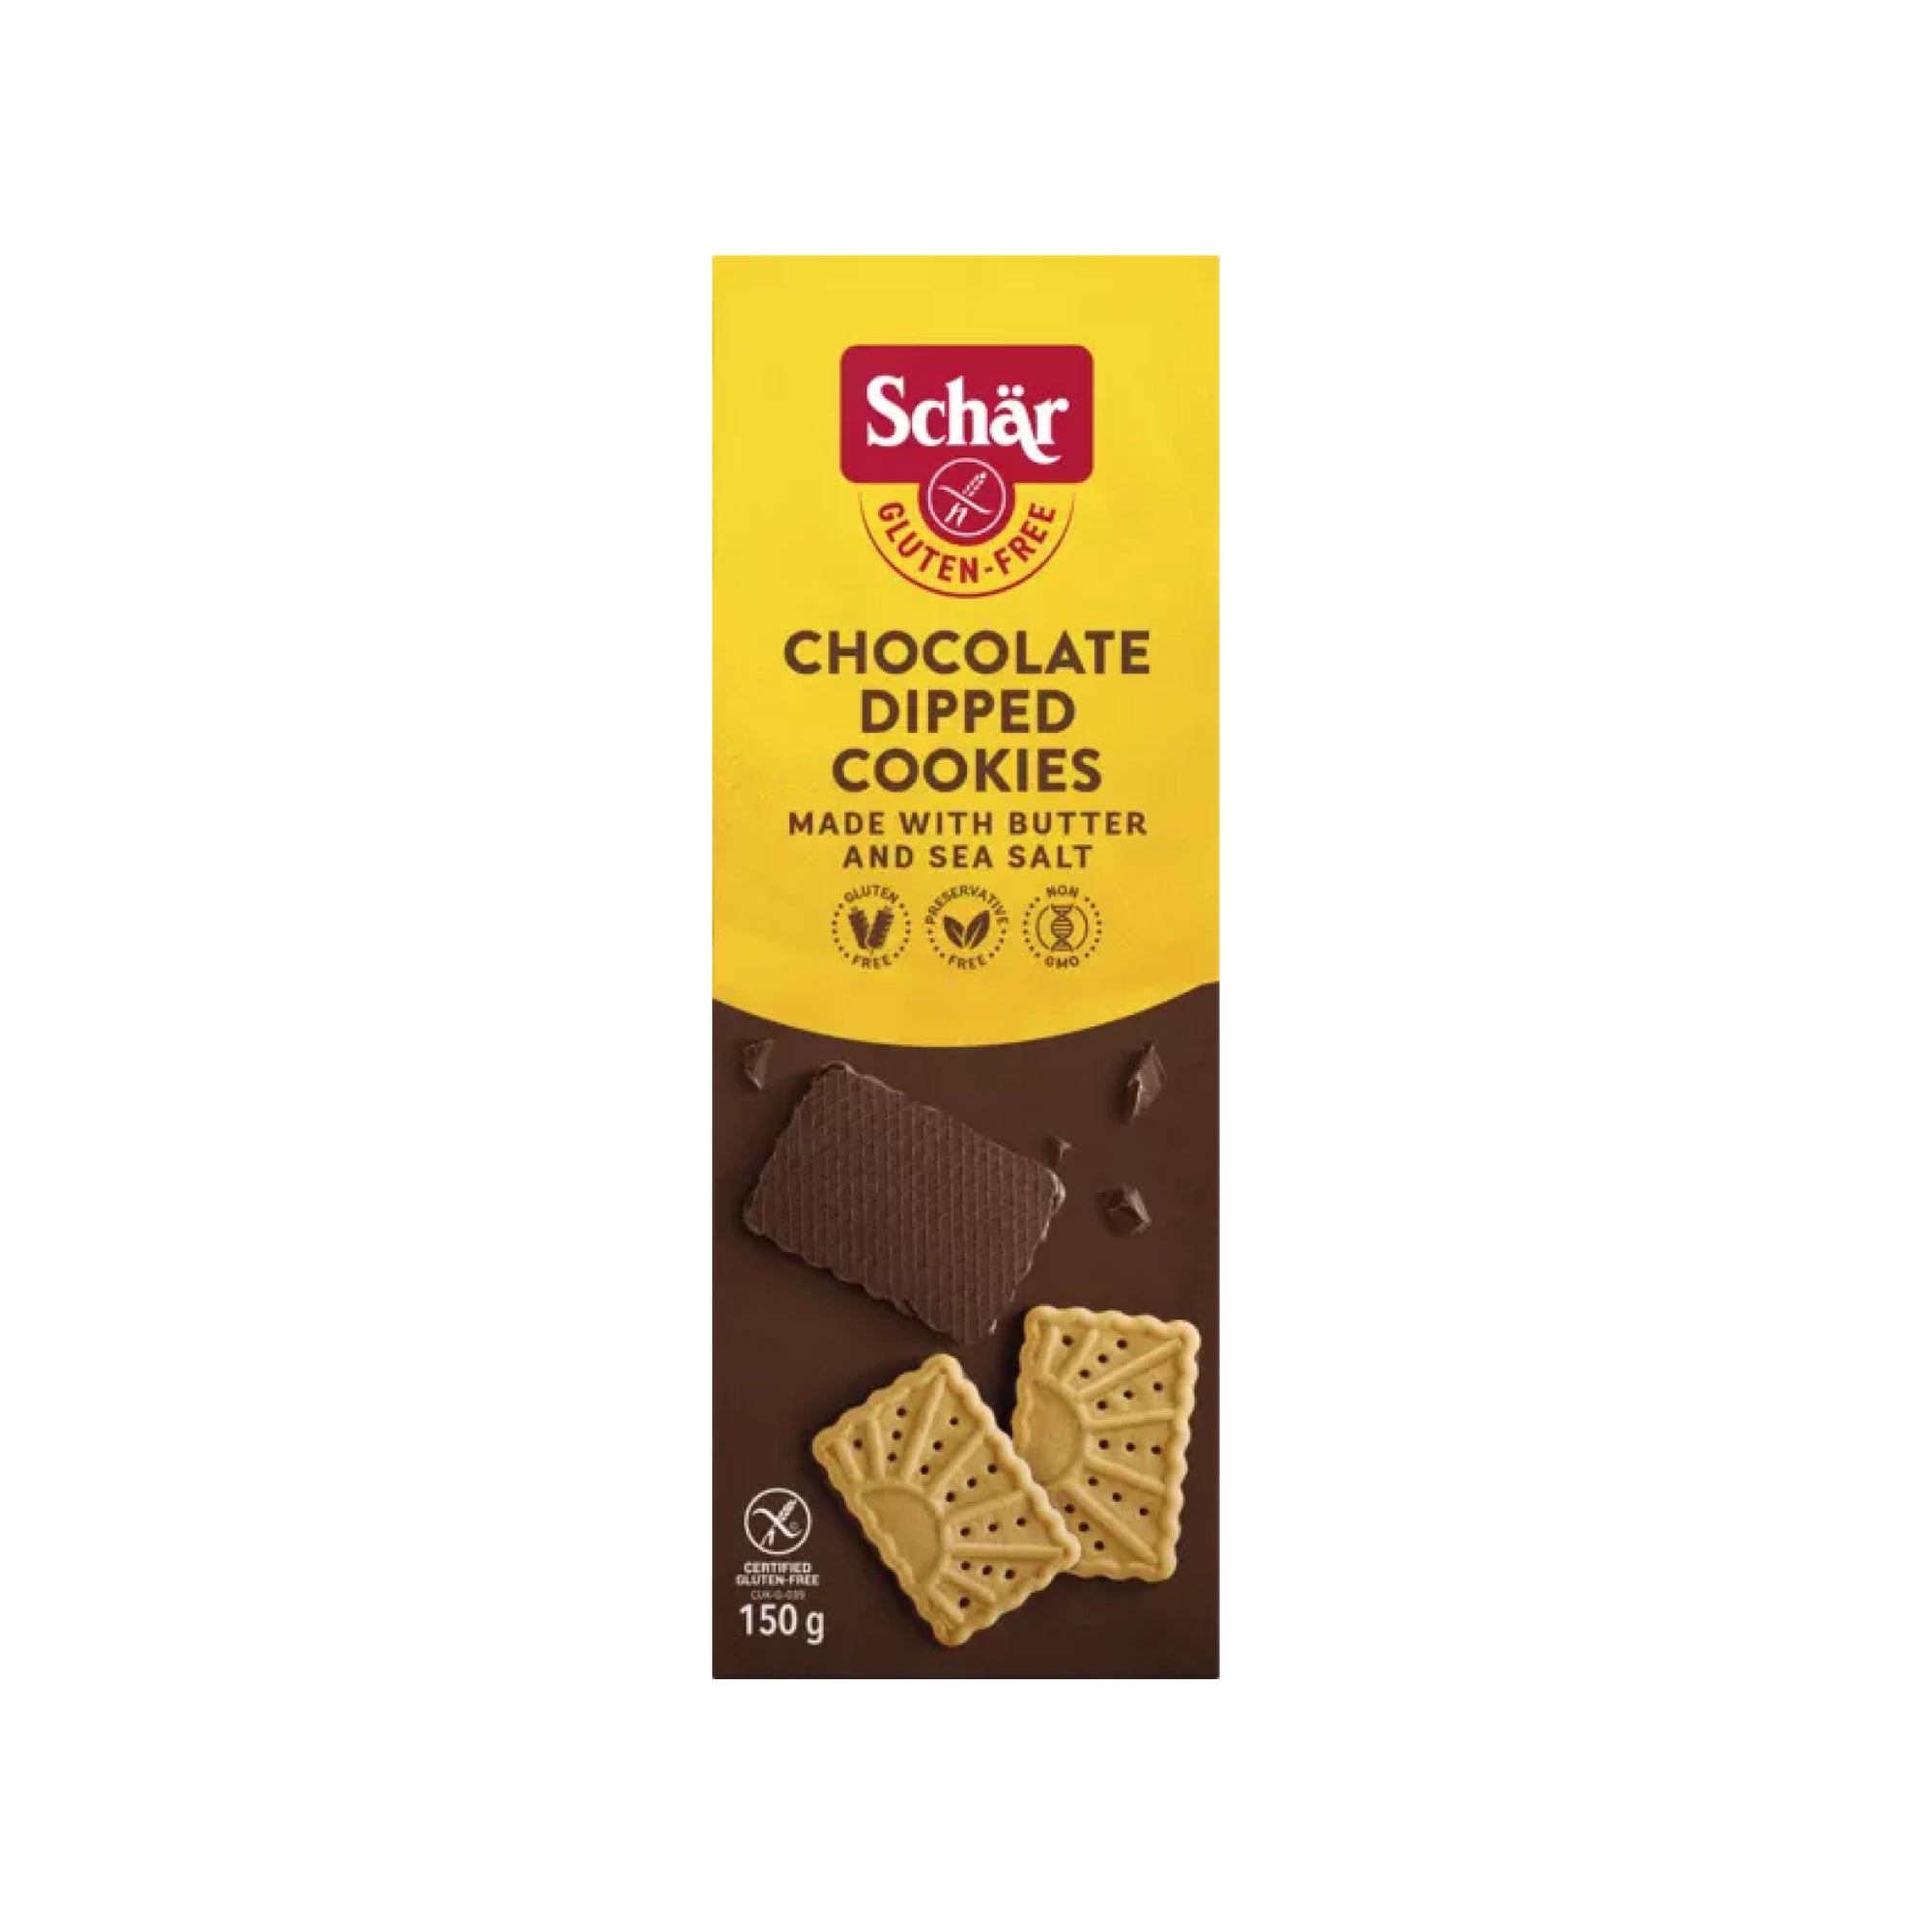 Schar Gluten-Free Chocolate Dipped Cookies 150g